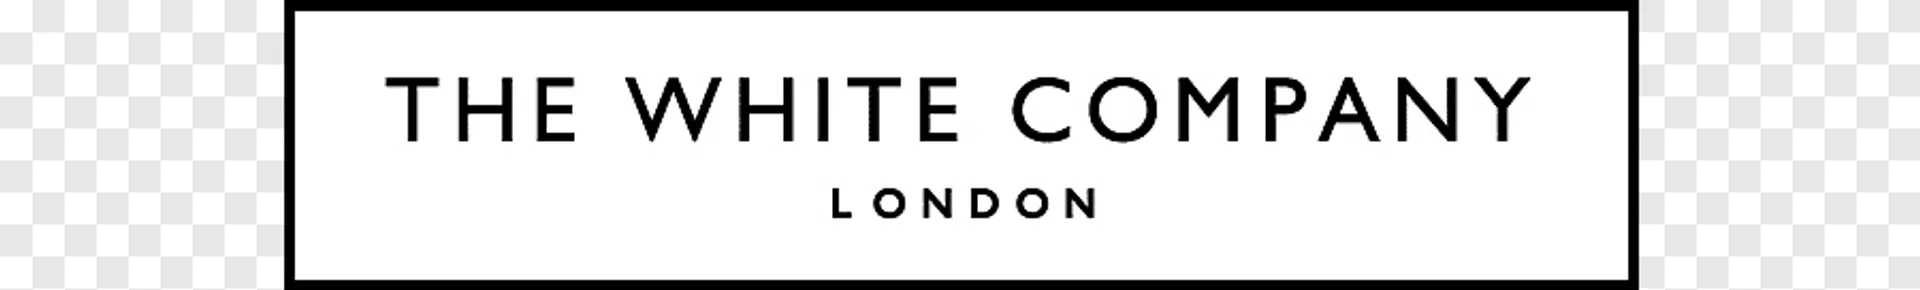 THE WHITE COMPANY logo